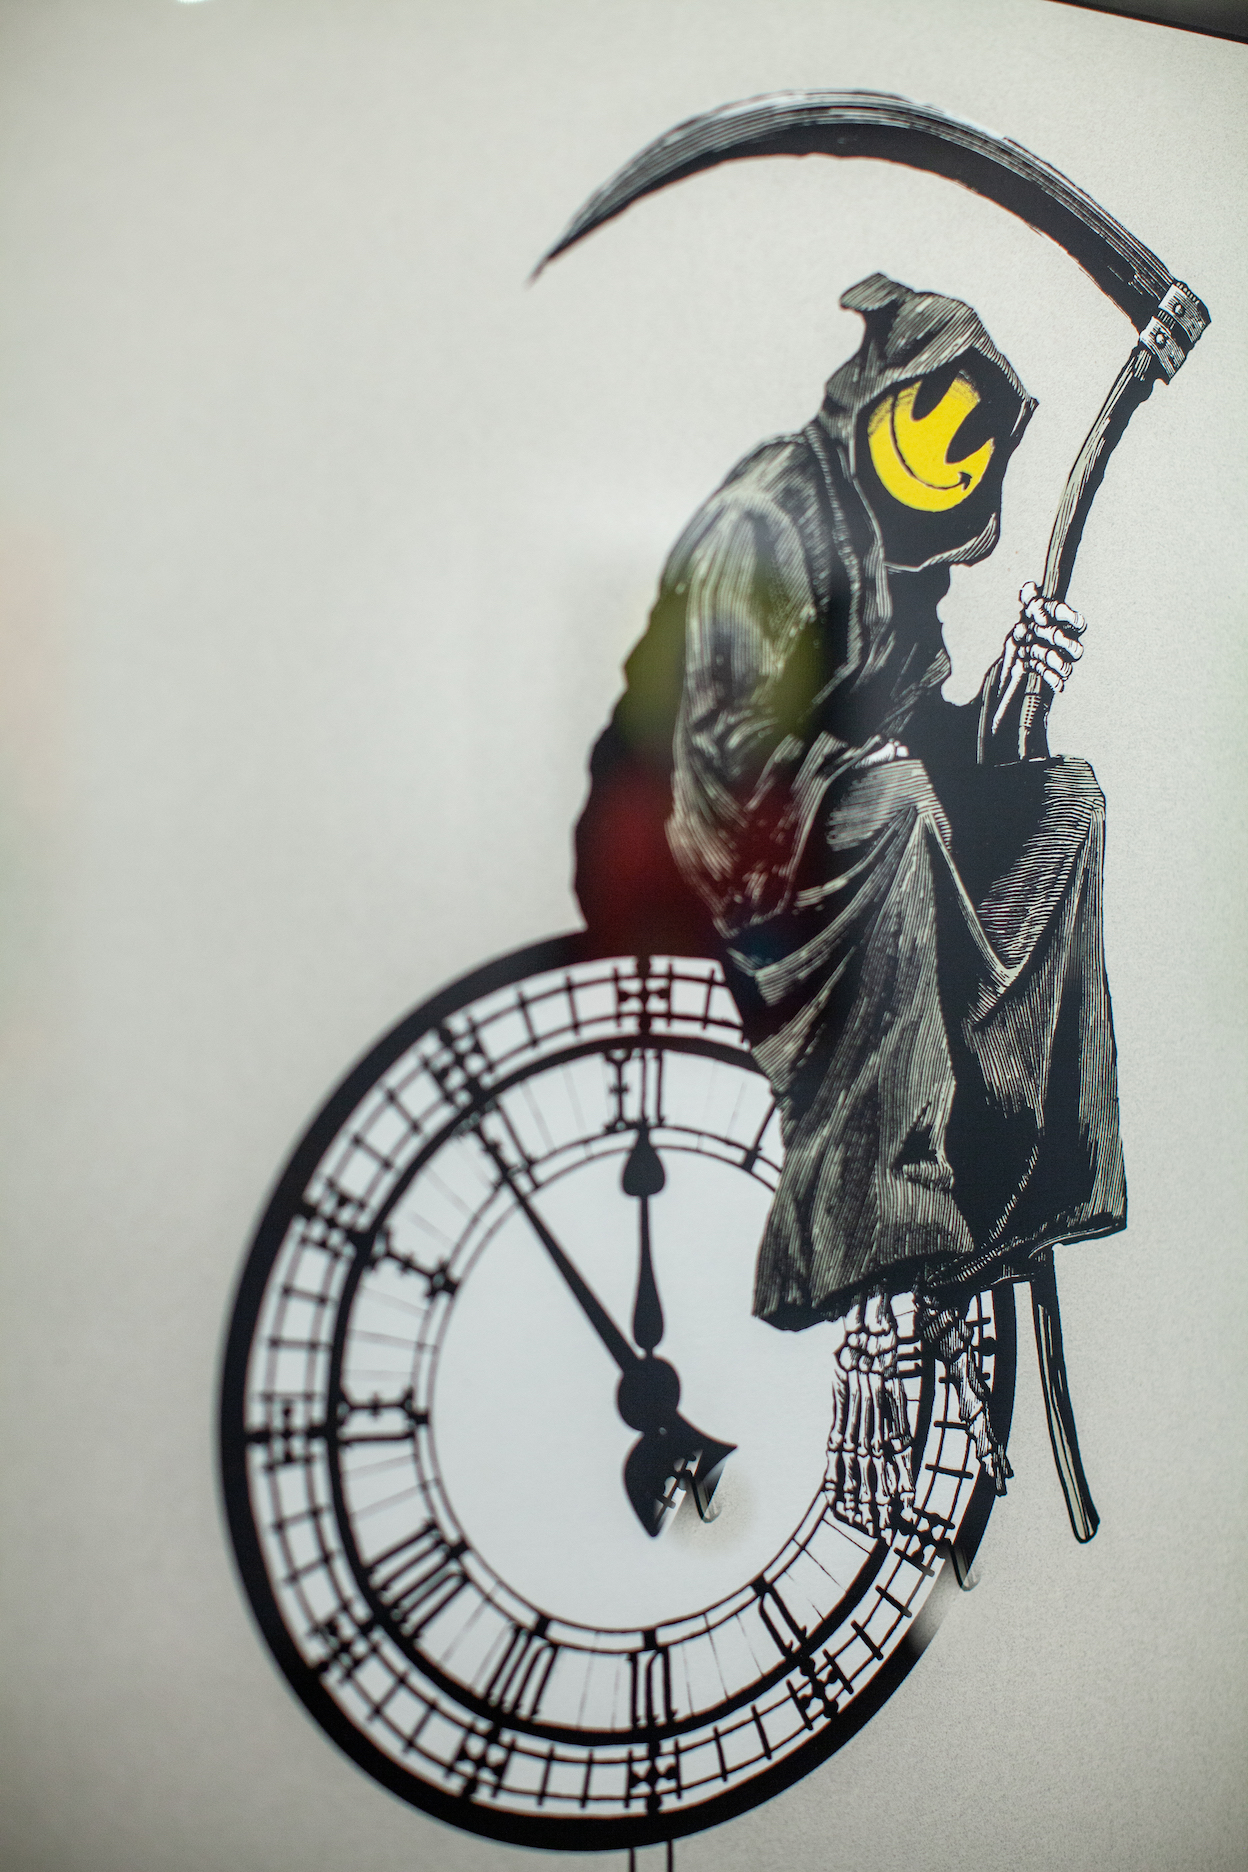 ARTCELS launches new art portfolio ‘Millennials’ with Banksy NFTs